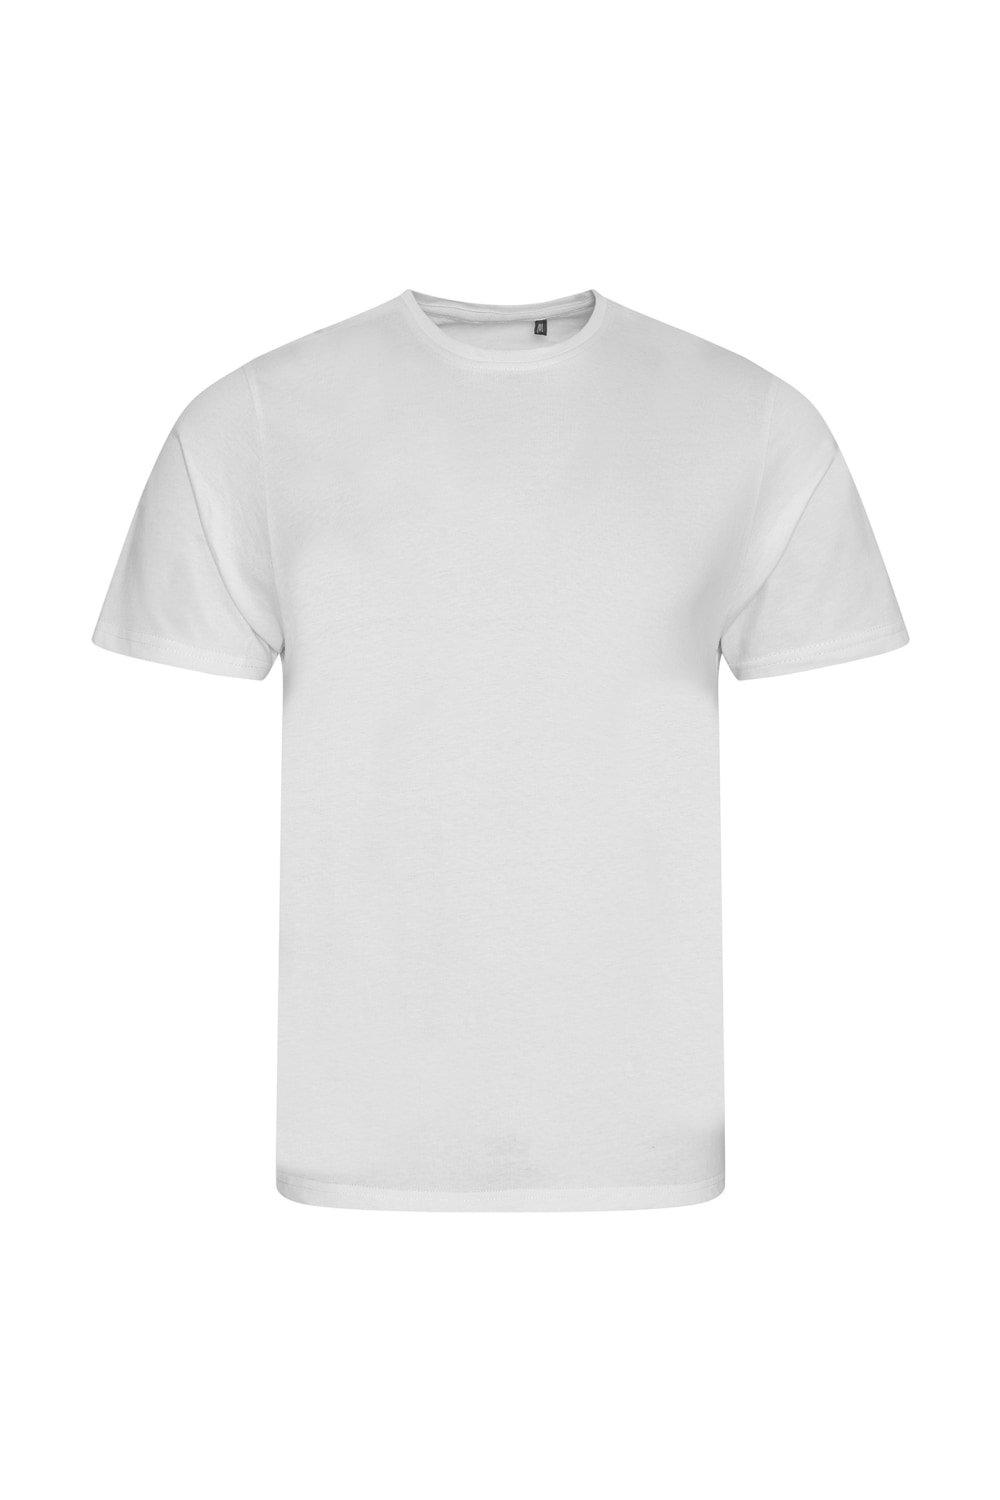 Каскадная футболка Ecologie, белый